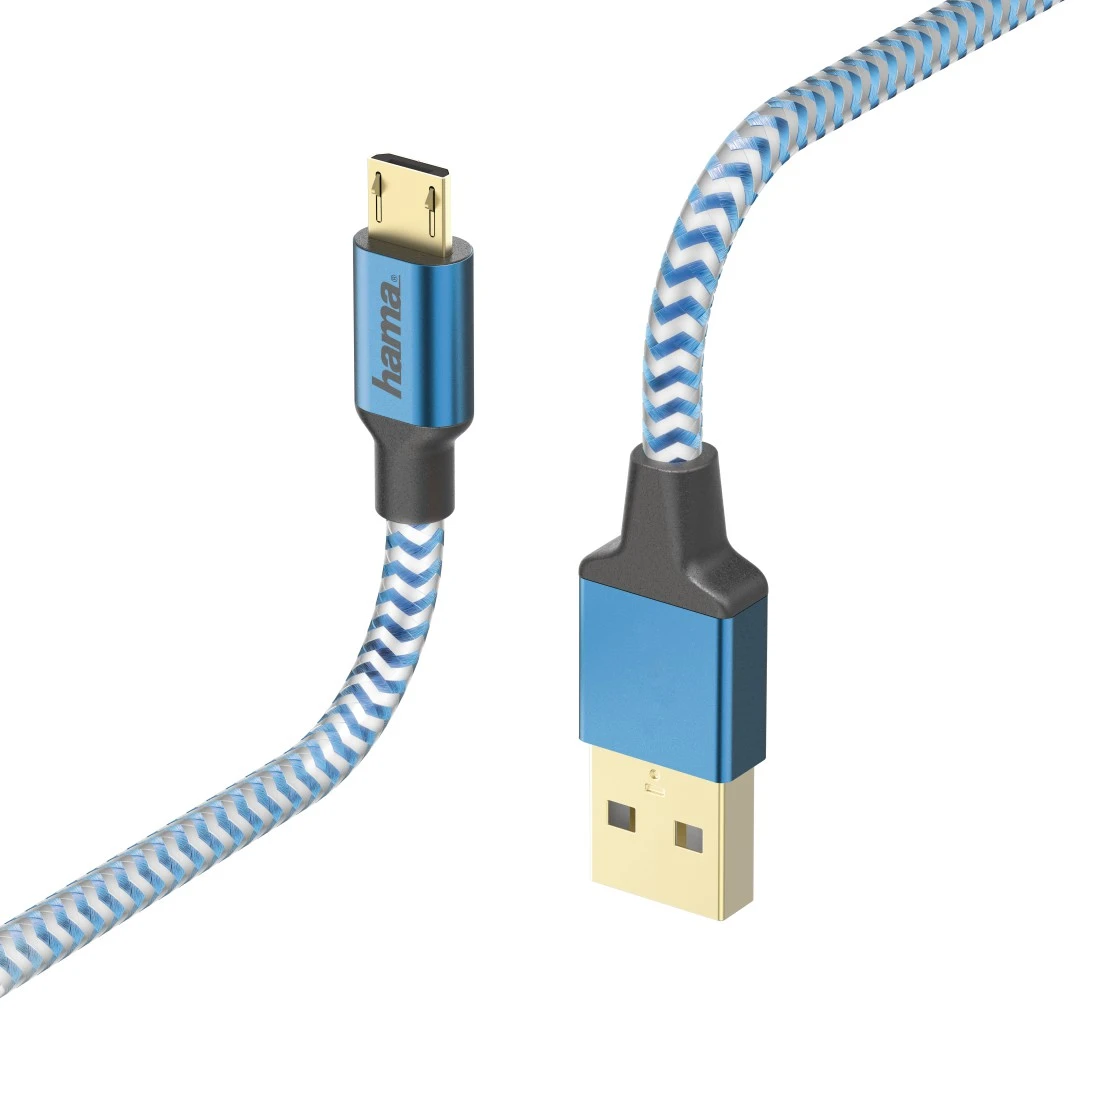 Micro-USB-Kabel mit LED Licht (blaue LEDS) - SmartGeocaching Onlineshop